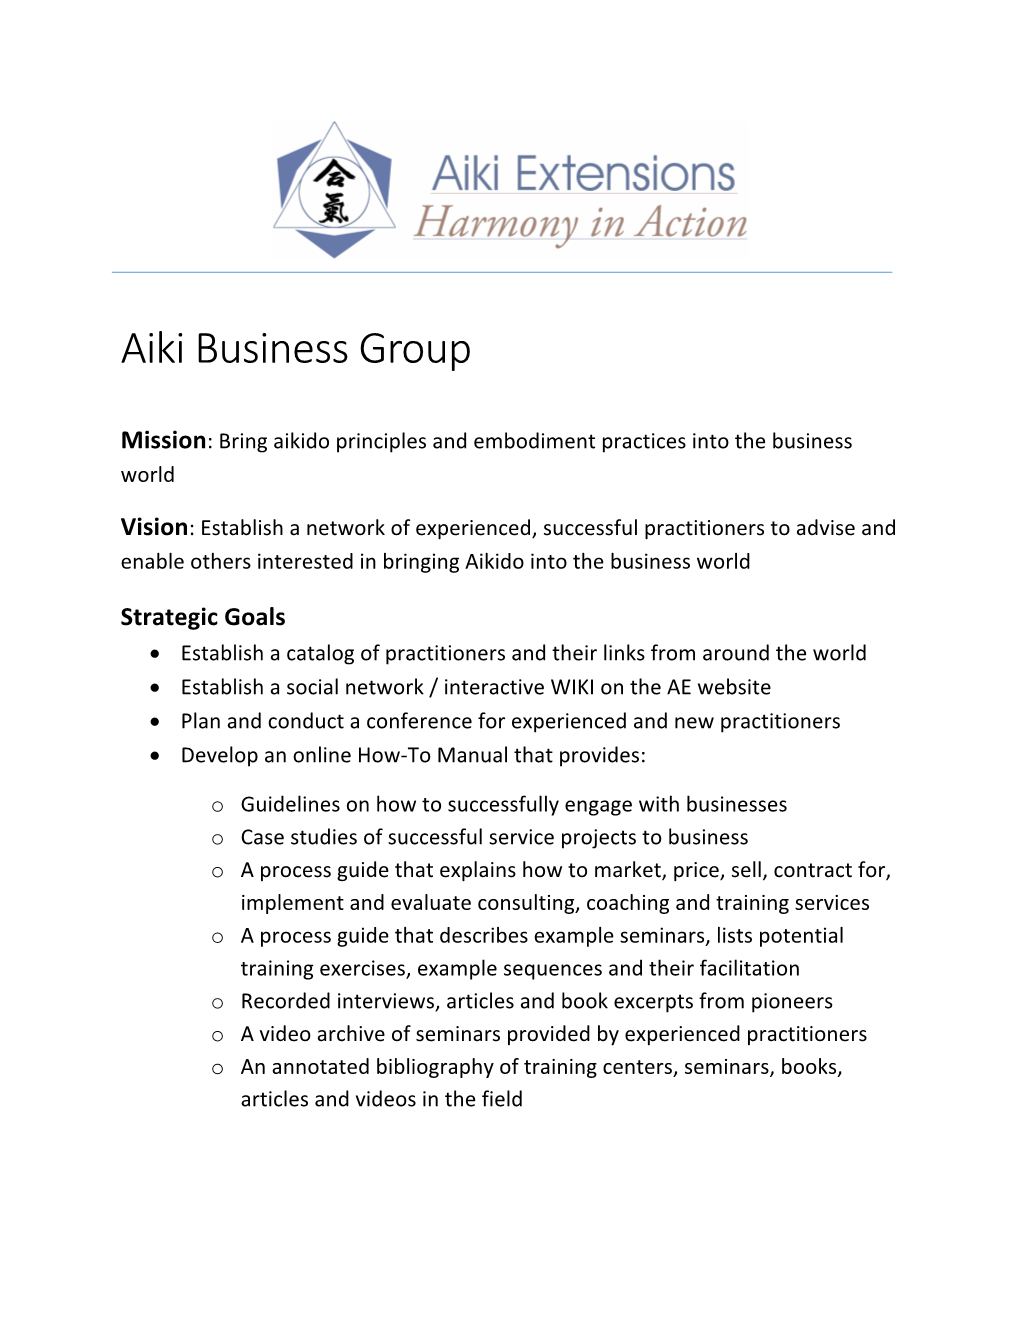 Aiki Business Group Primer